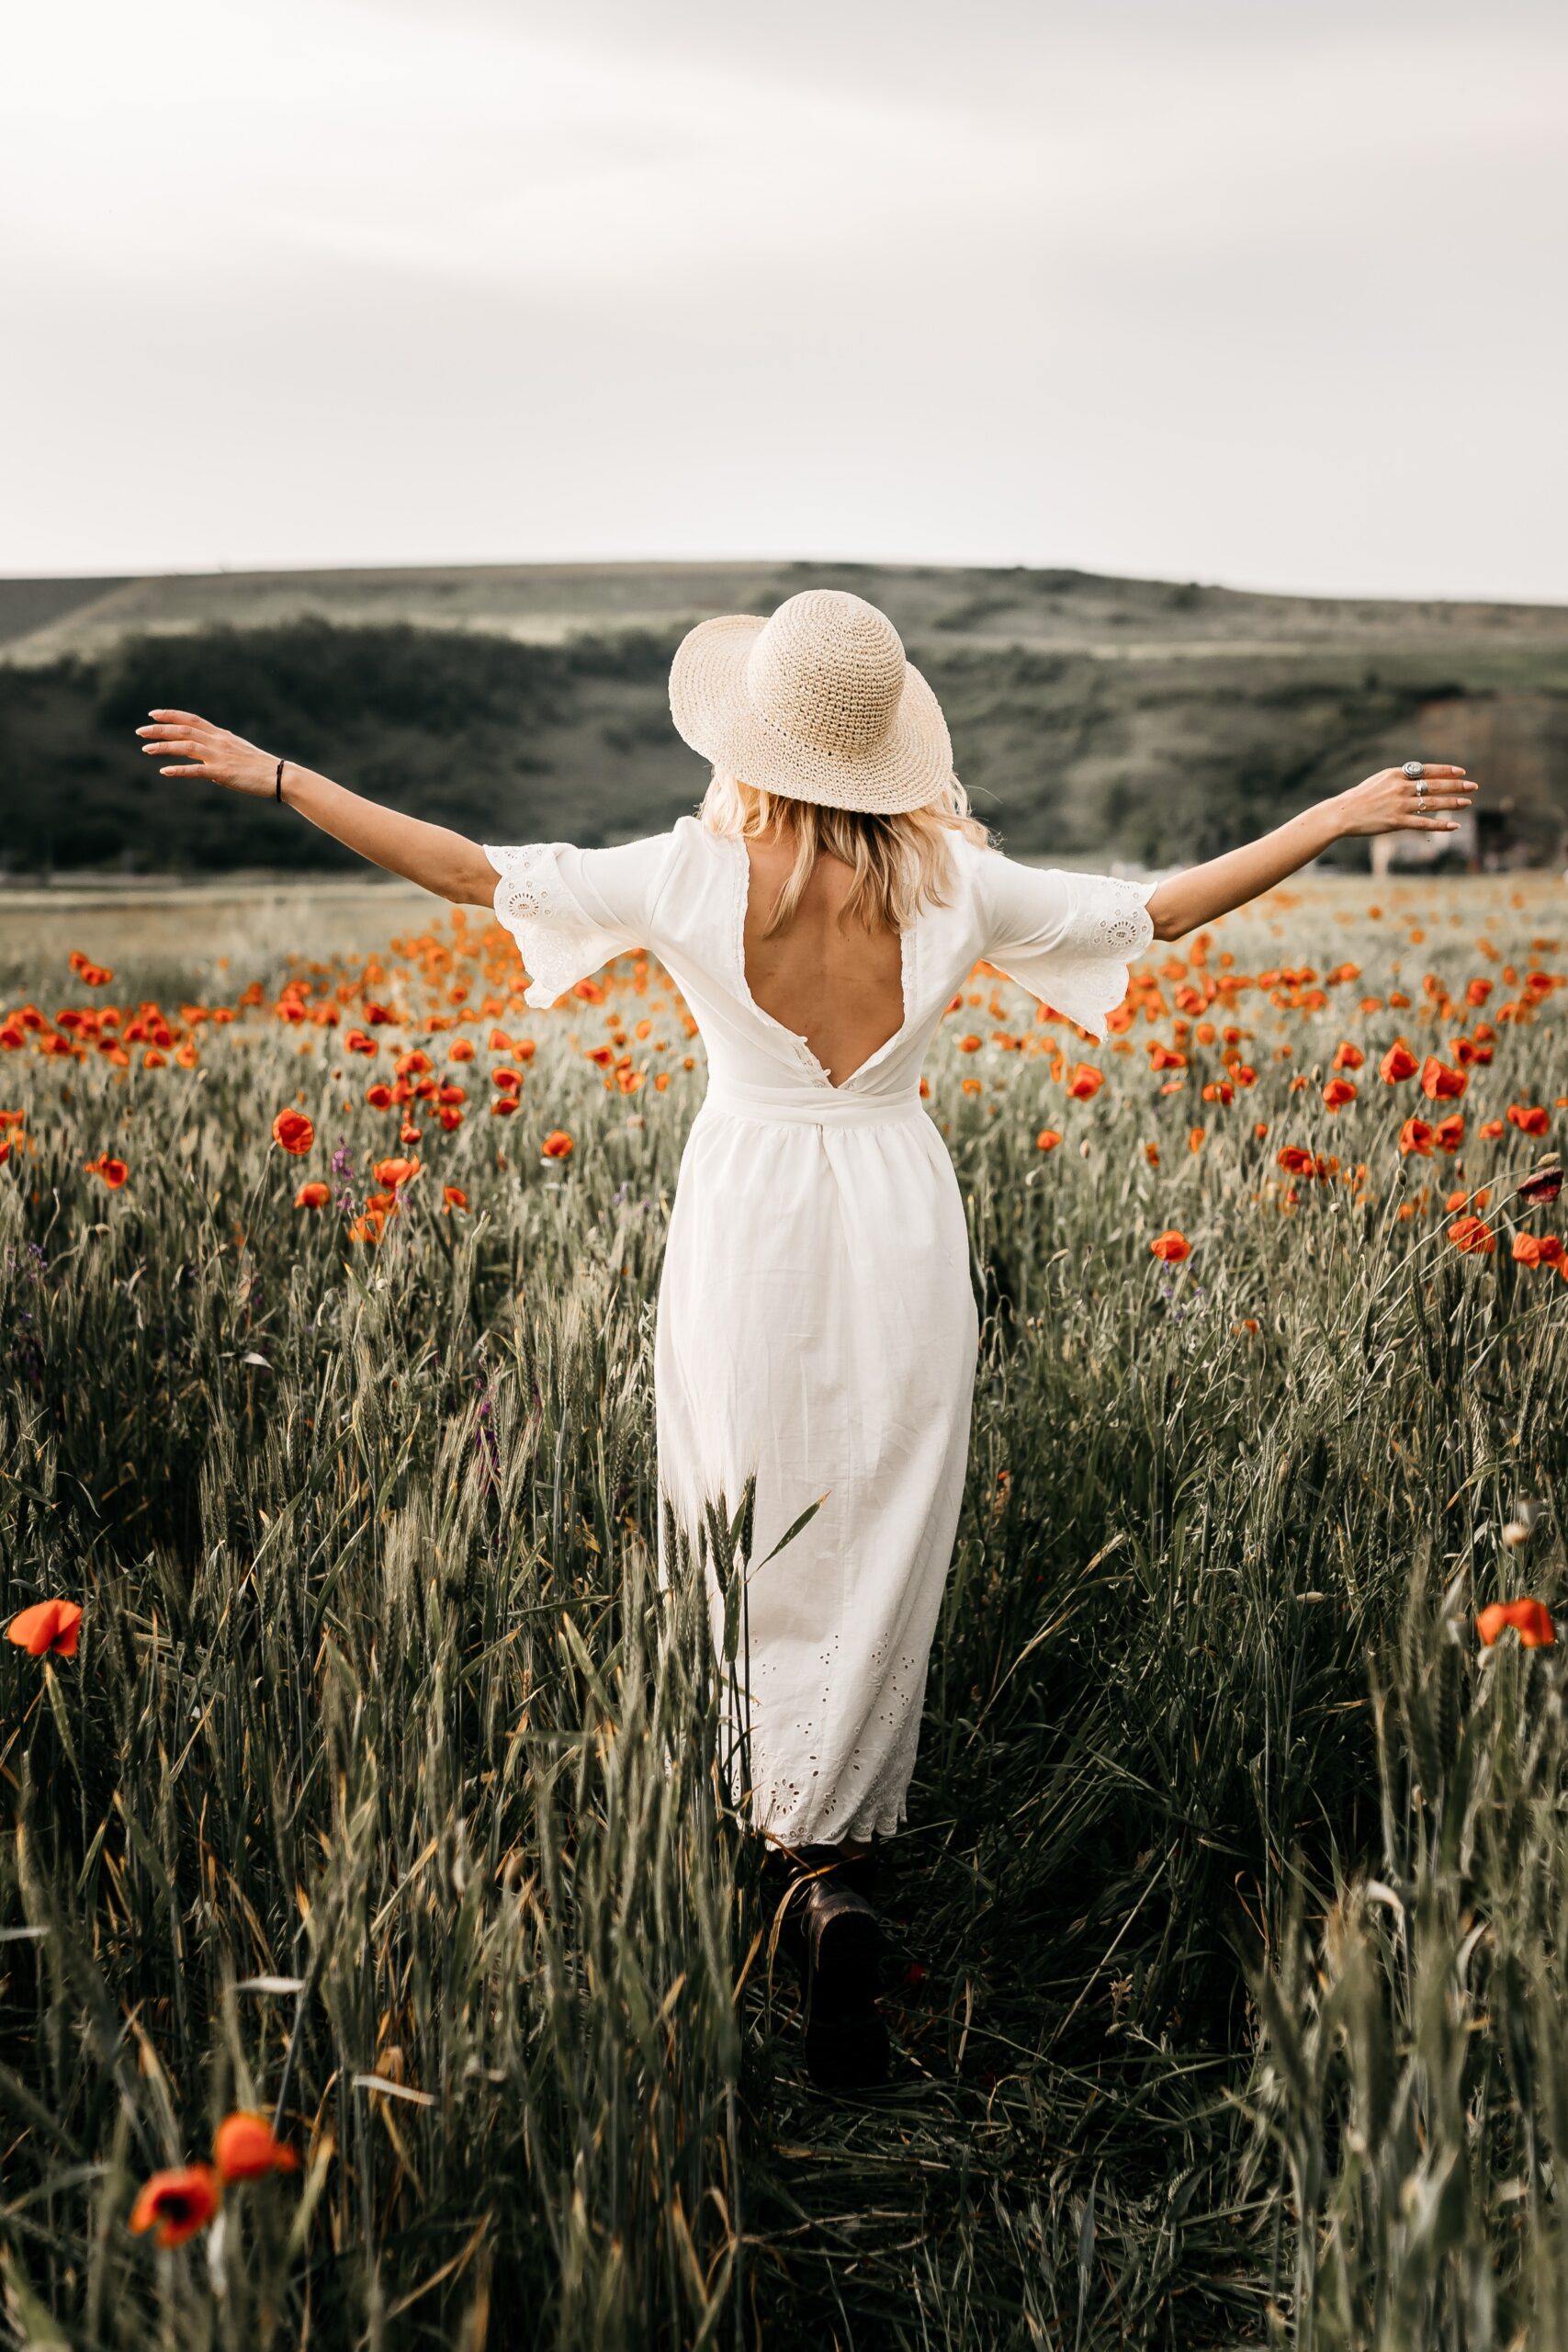 Girl in a white dress walking through a field